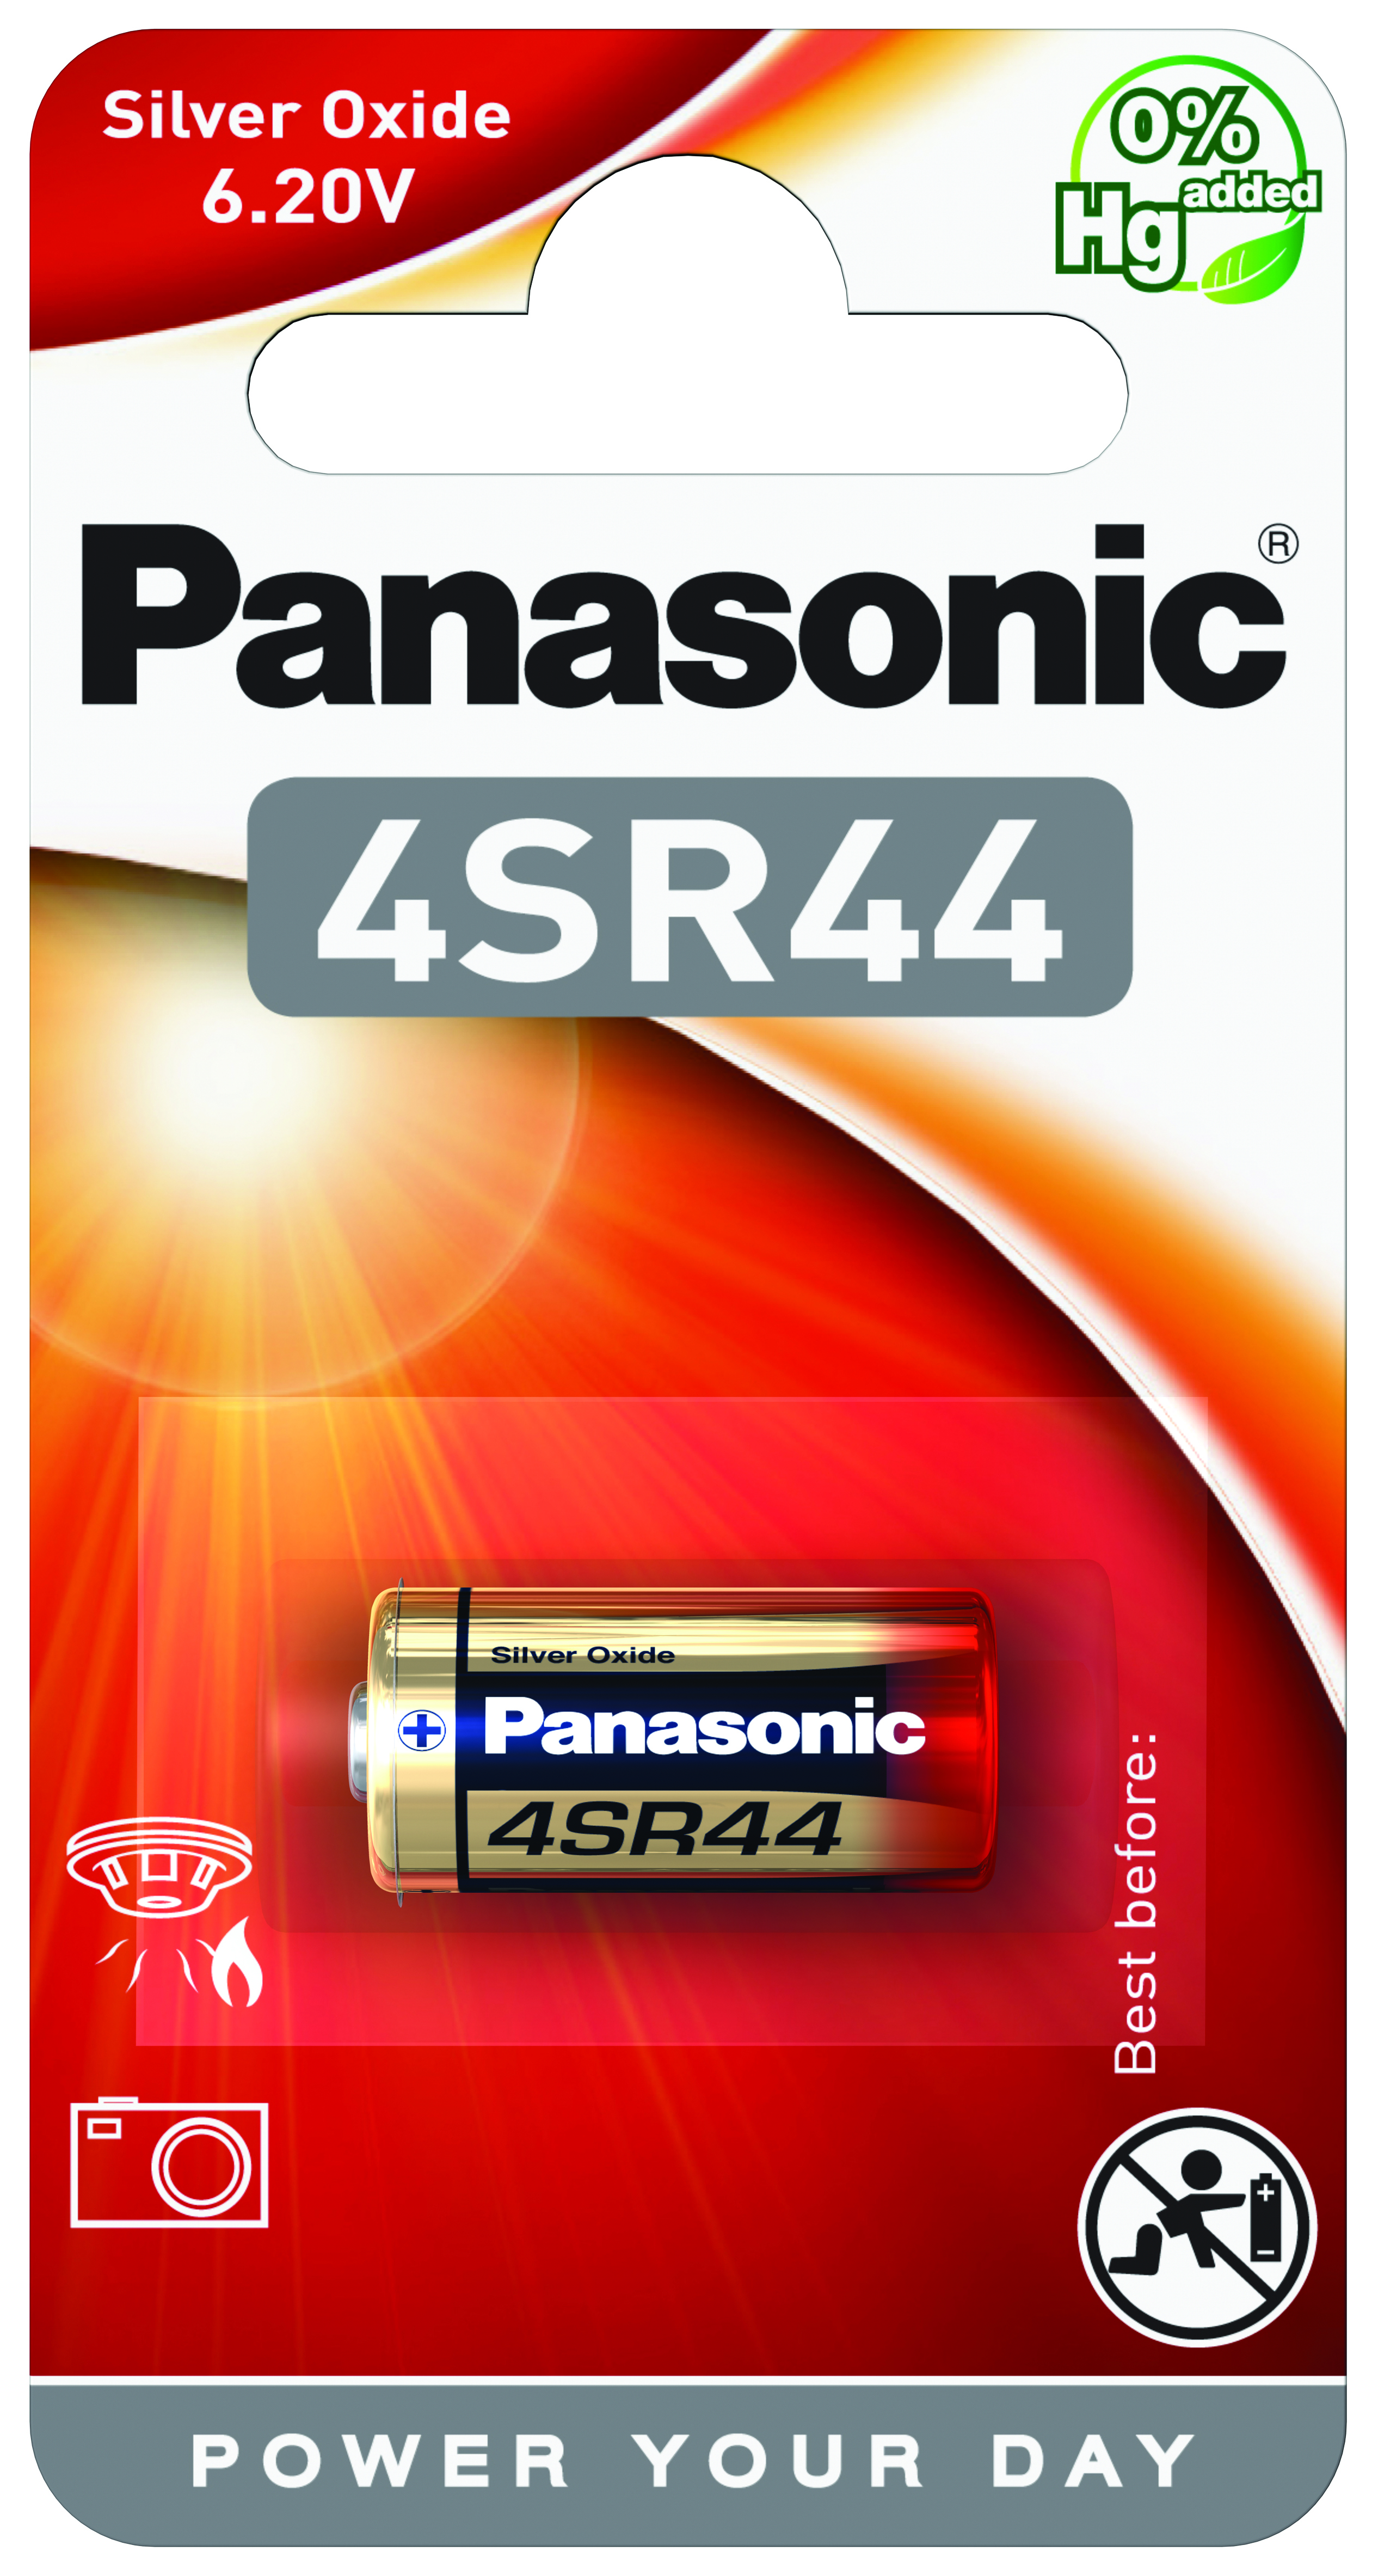 Panasonic 4SR44 (Silberoxid/Uhrenbatterien)